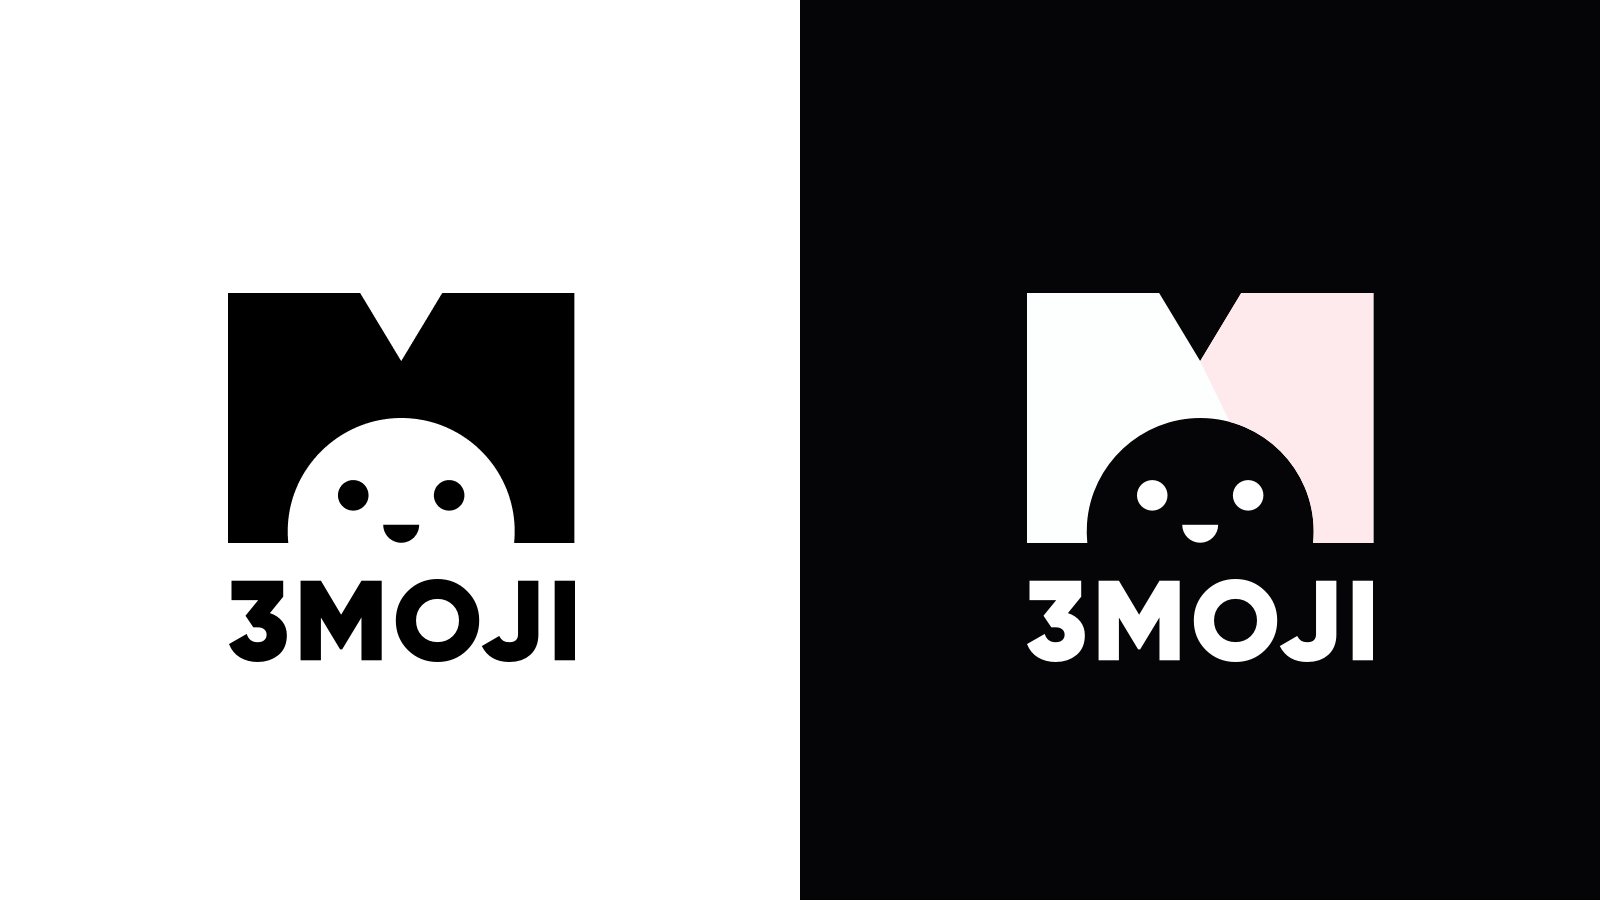 3moji logo on dark and light backgrounds